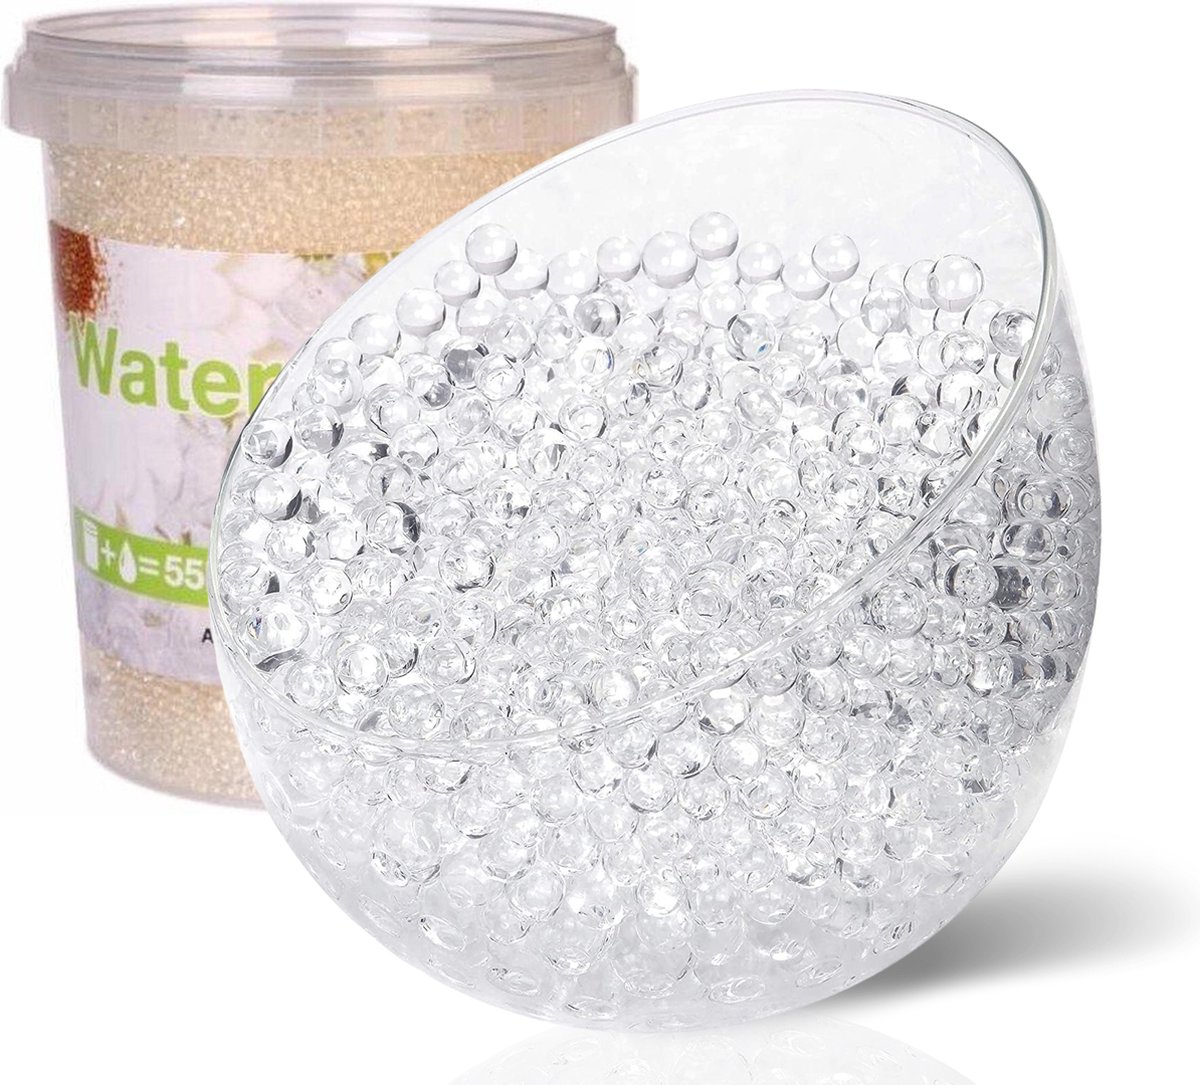 Boules de gel absorbant l'eau Orbeez - 18 grammes - 14-15 mm | bol